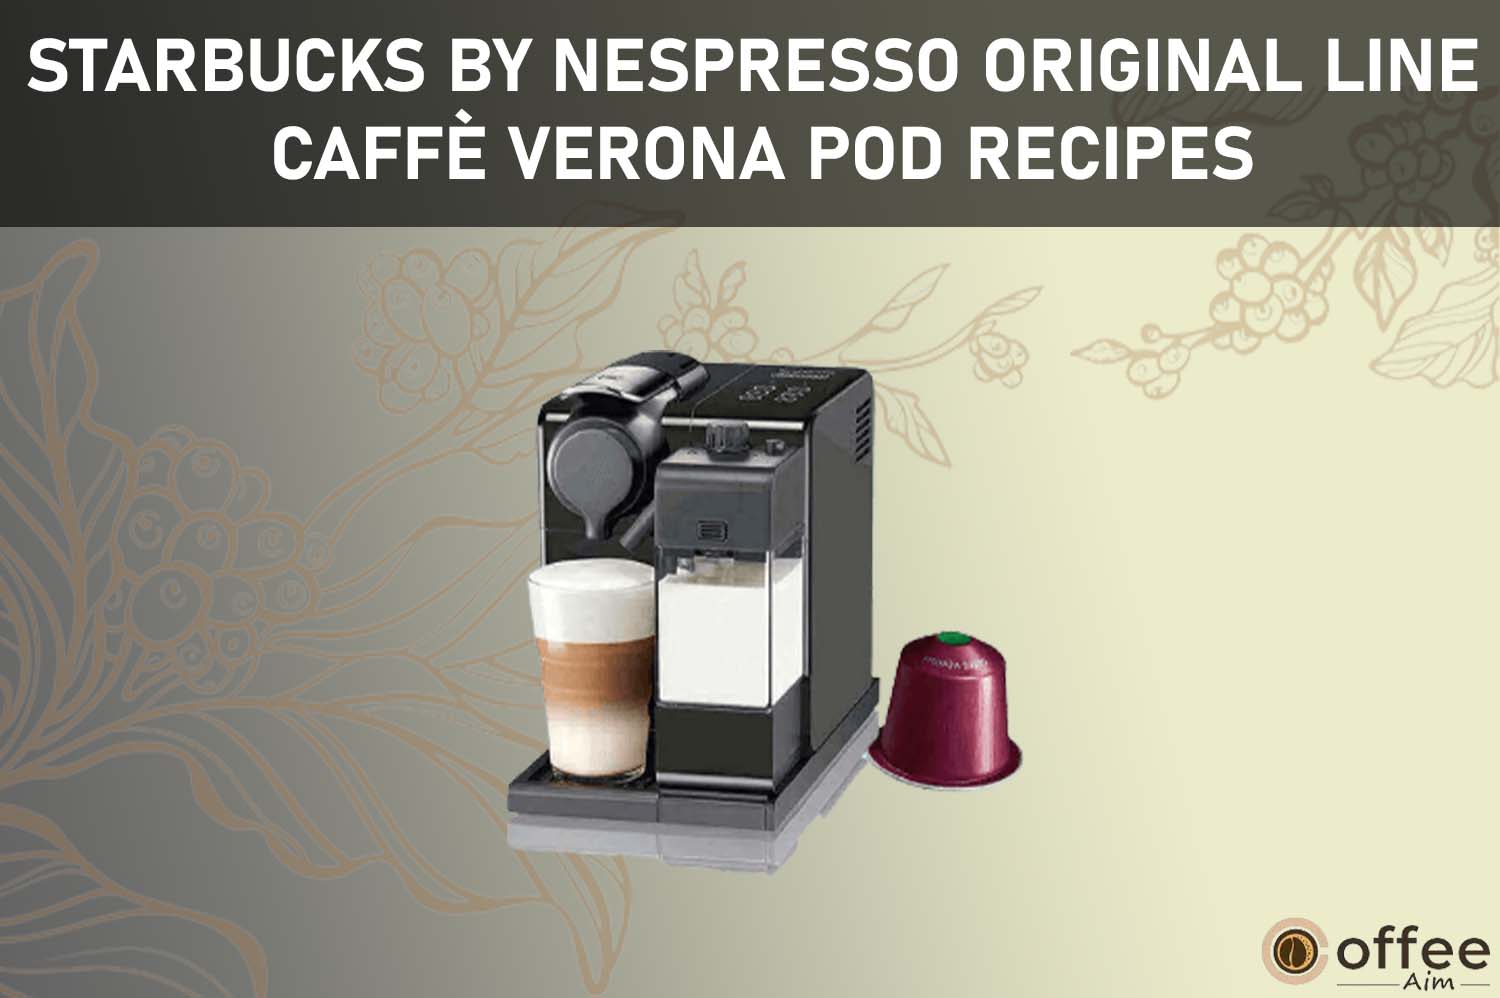 Featured image for the article "Starbucks by Nespresso Original Line Caffè Verona Pod Recipes"